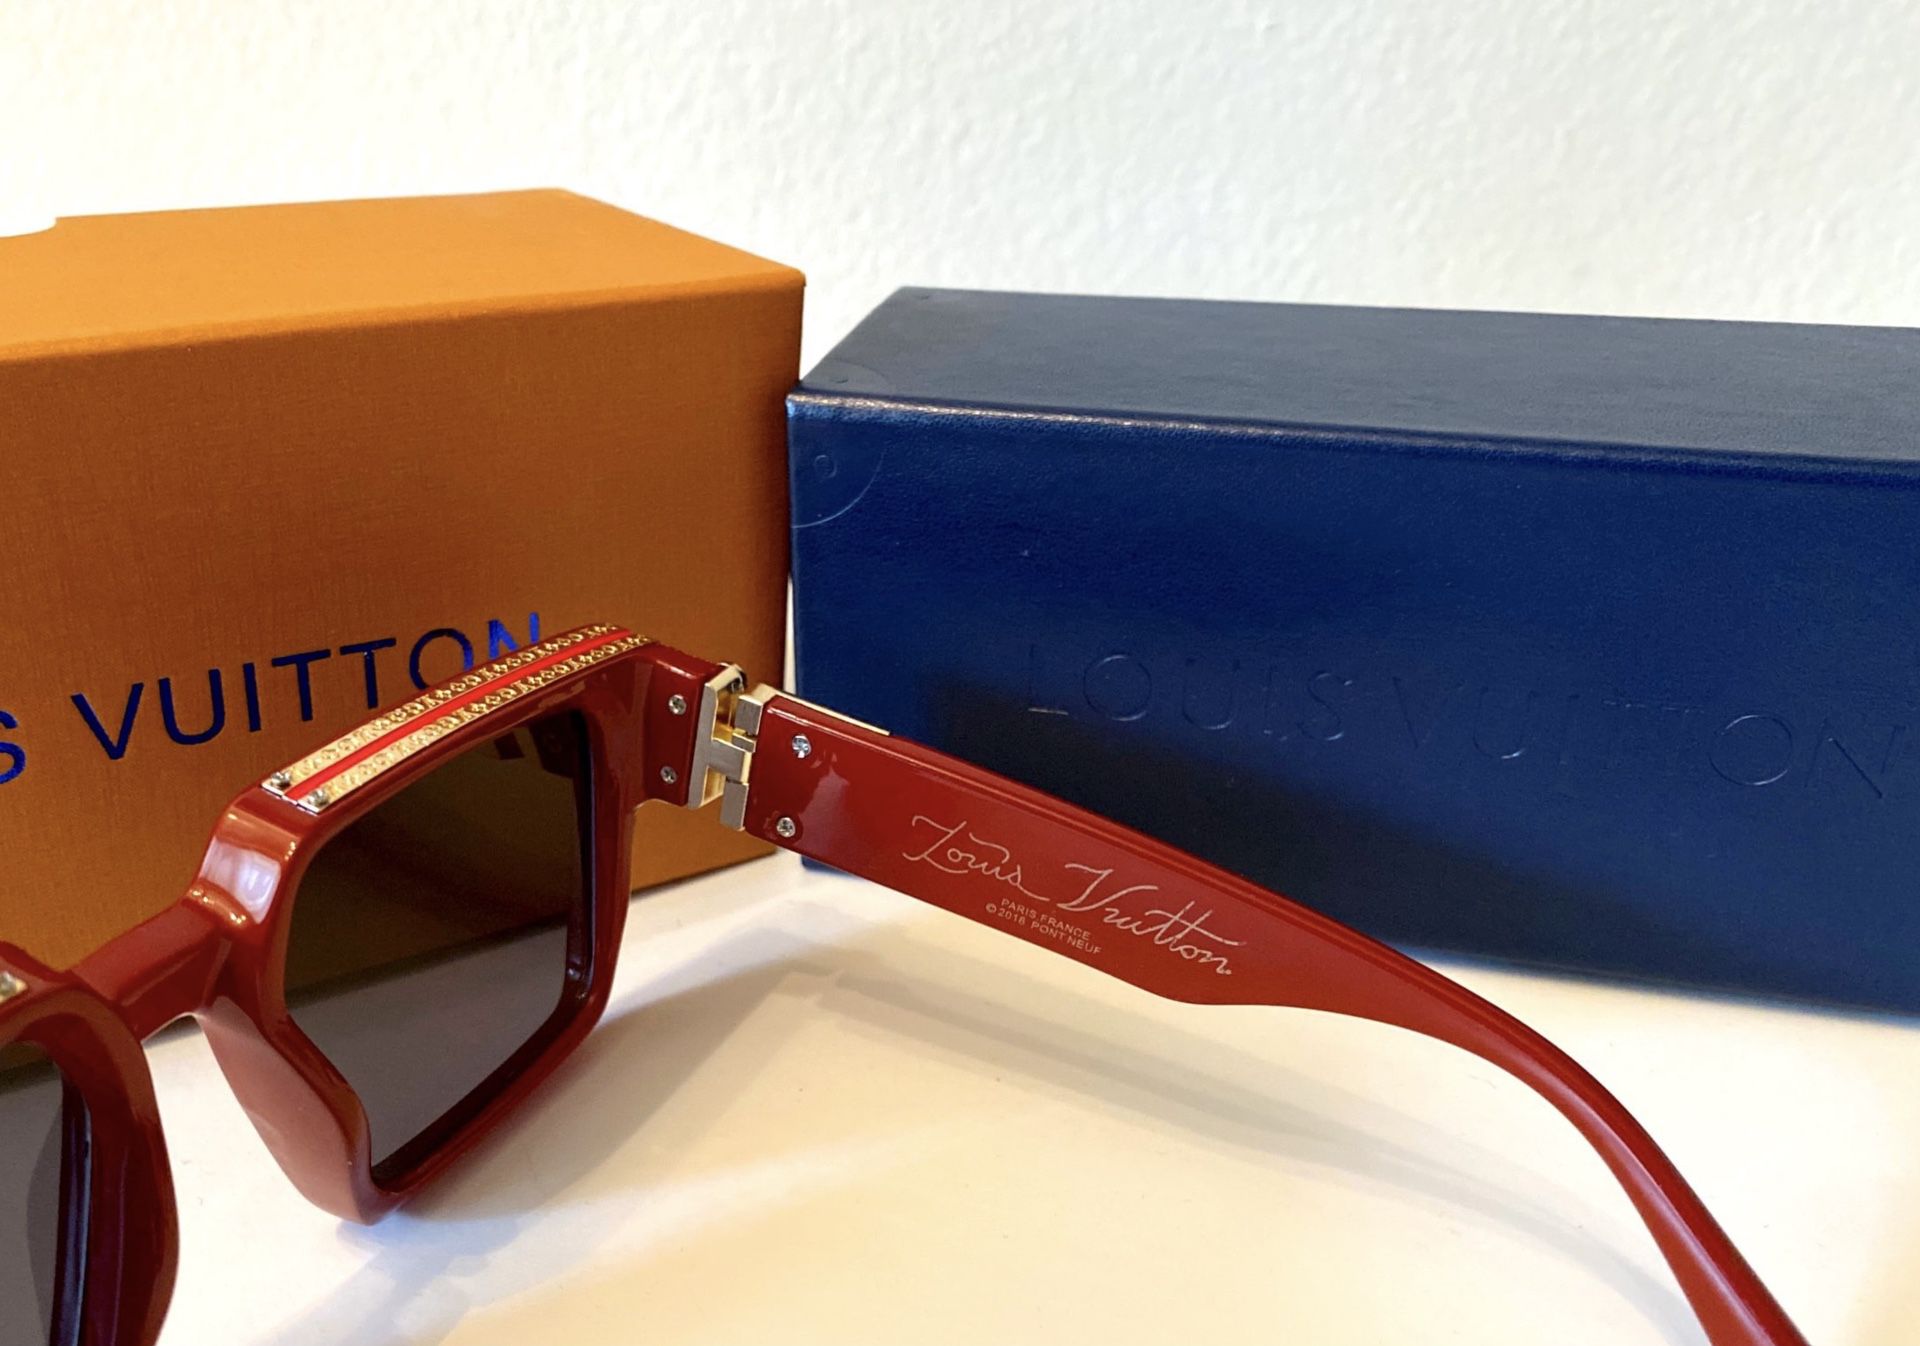 LV Waimea Sunglasses 2108W for Sale in Irvine, CA - OfferUp